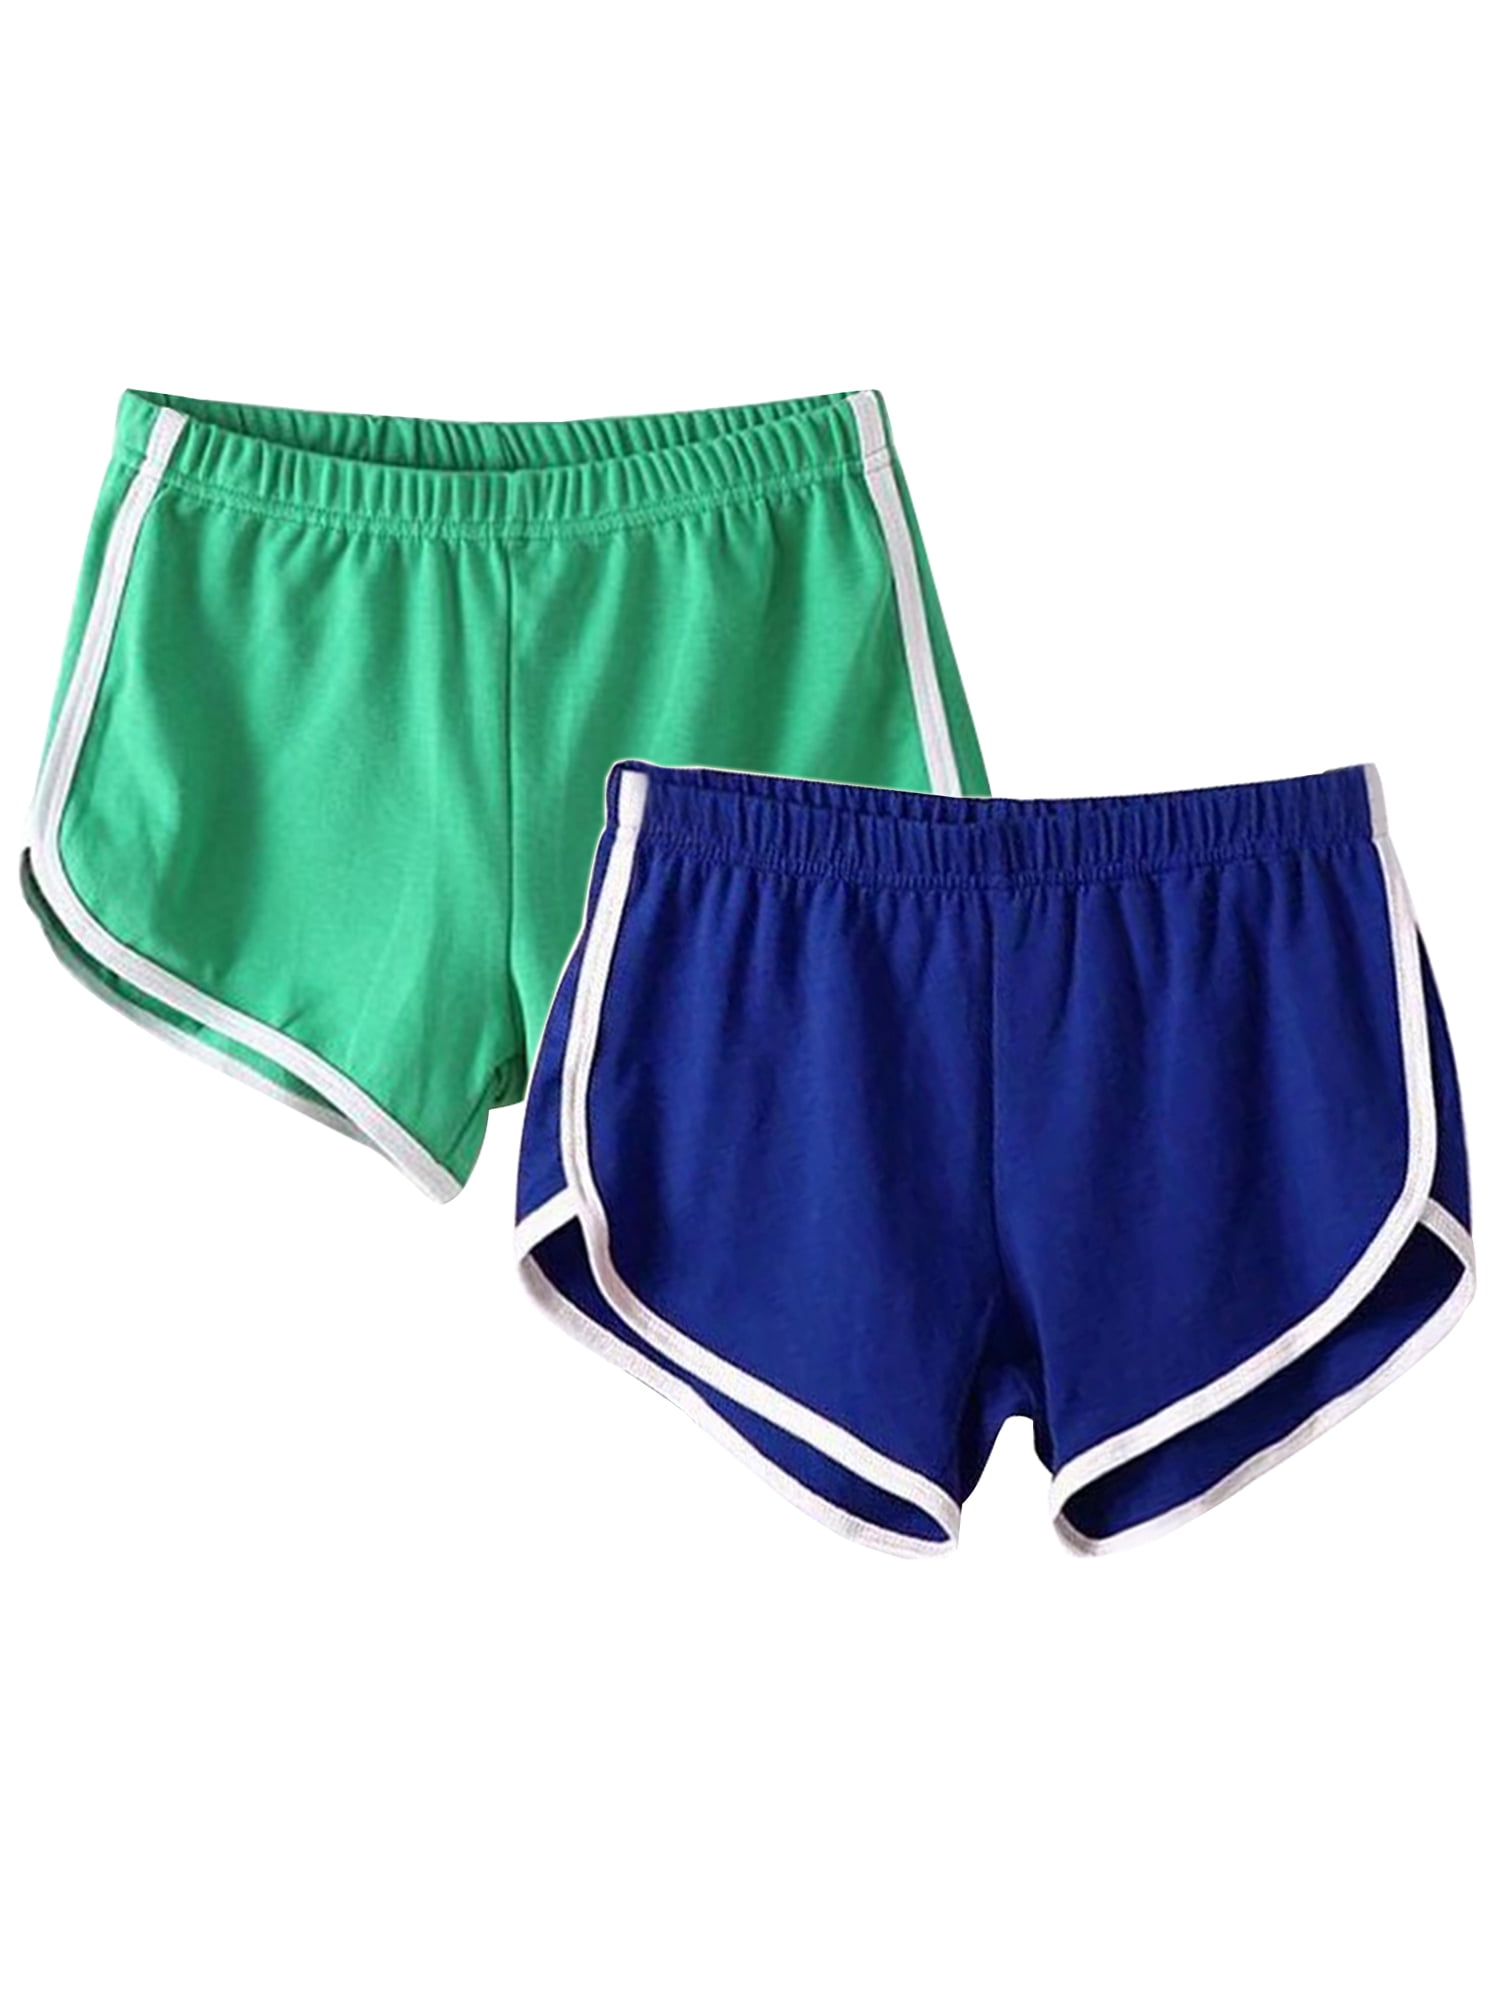 Women Sports Shorts Yoga Underwear Casual Gym Jogging Lounge Summer Hot Pants